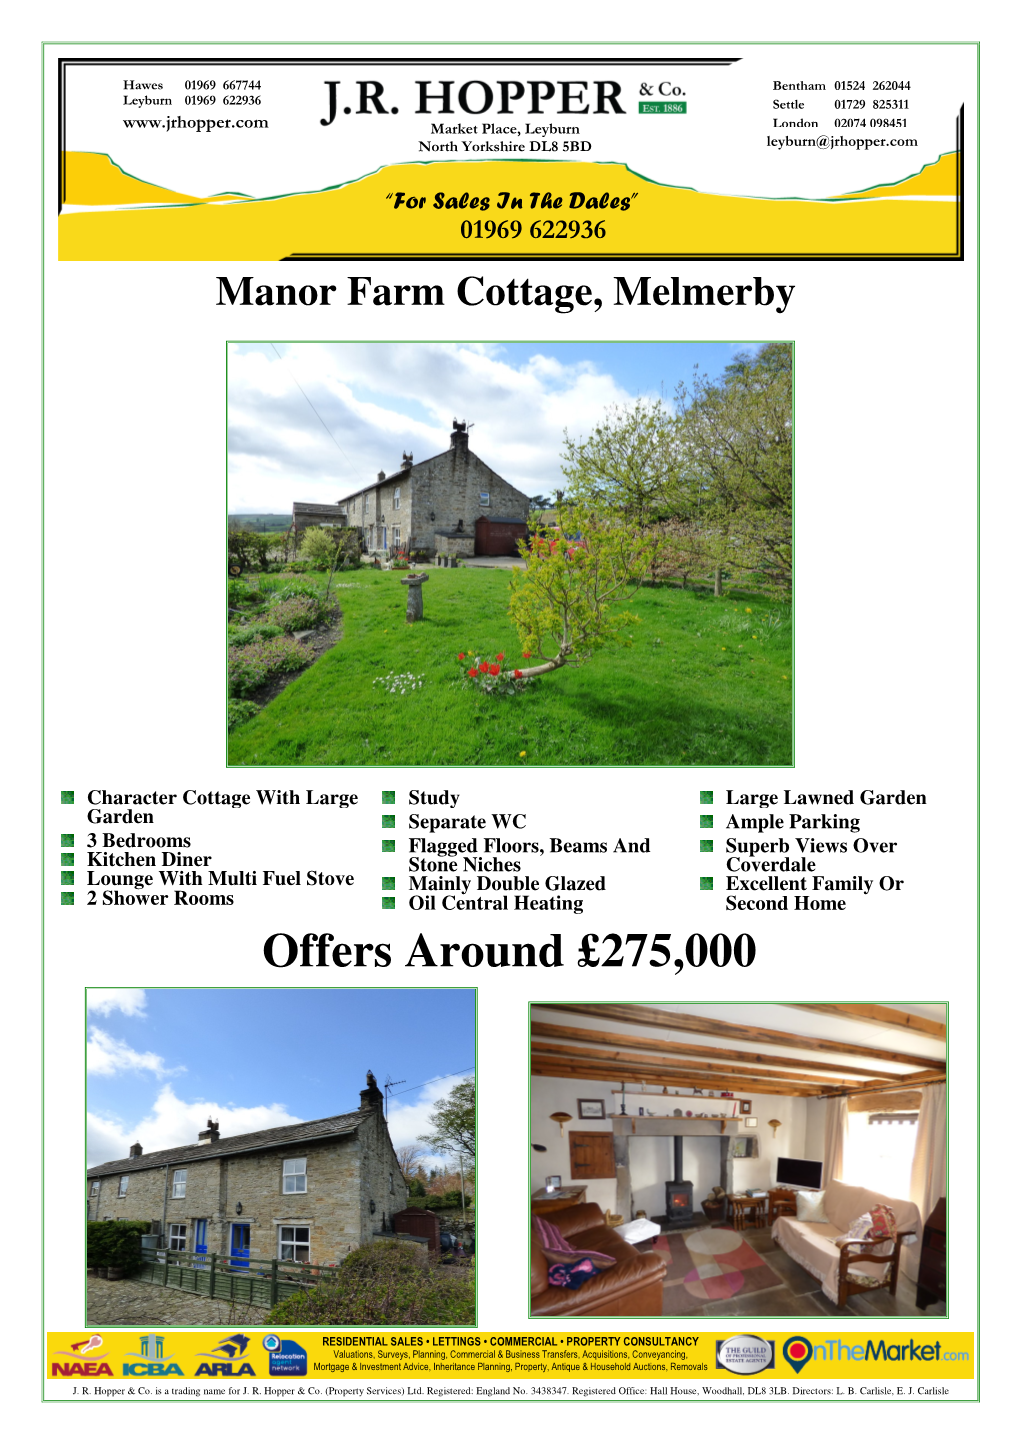 Manor Farm Cottage, Melmerby